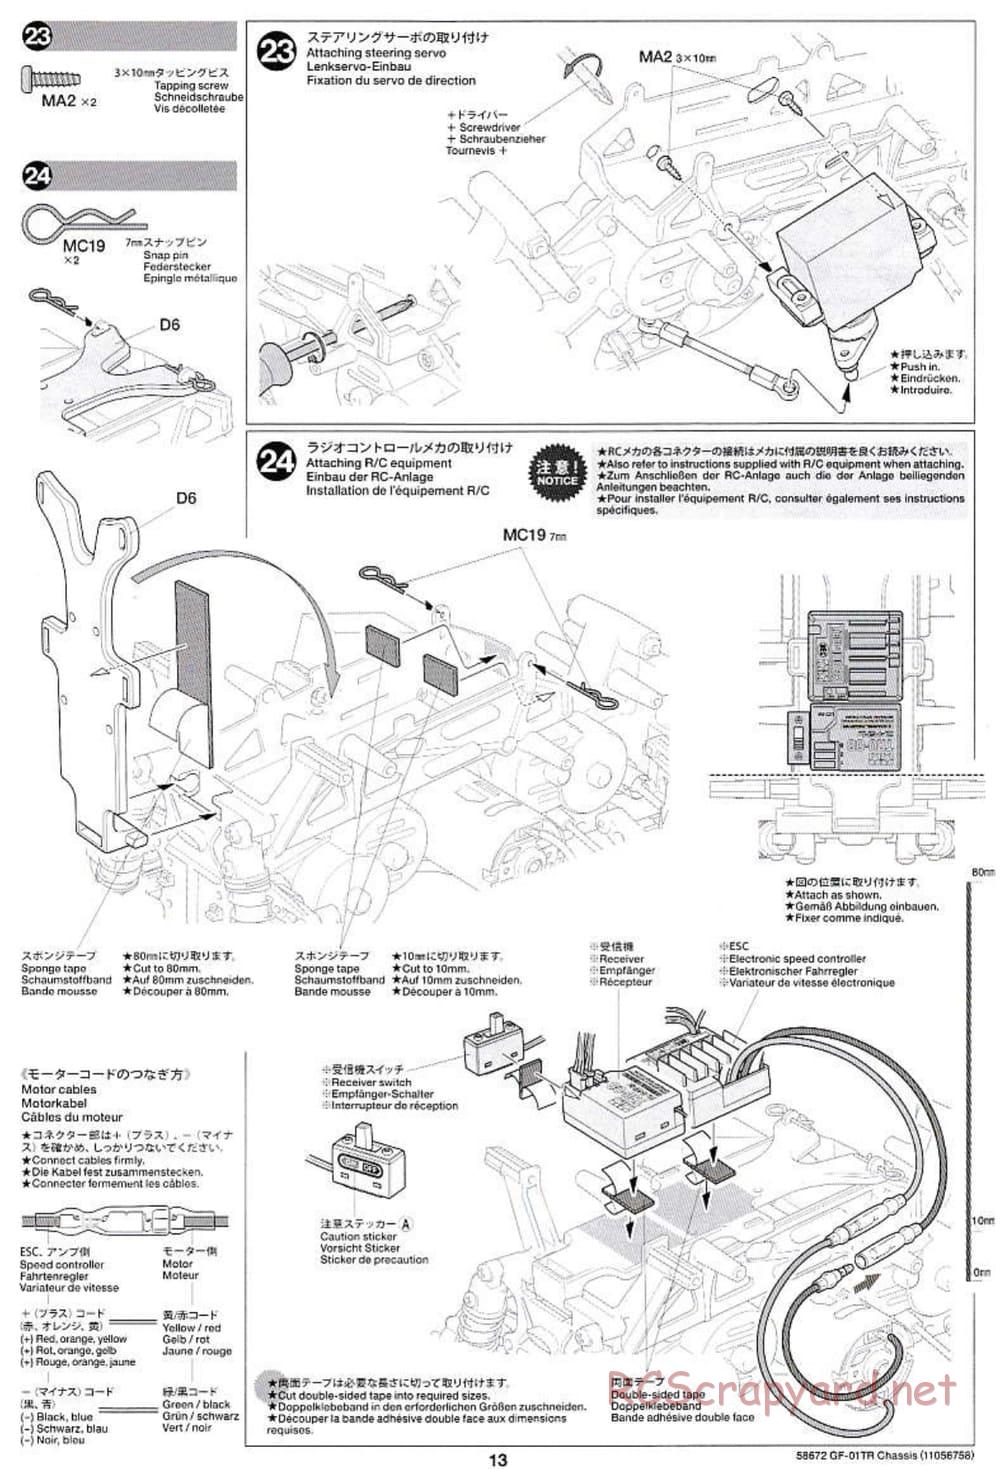 Tamiya - Monster Beetle Trail - GF-01TR Chassis - Manual - Page 13